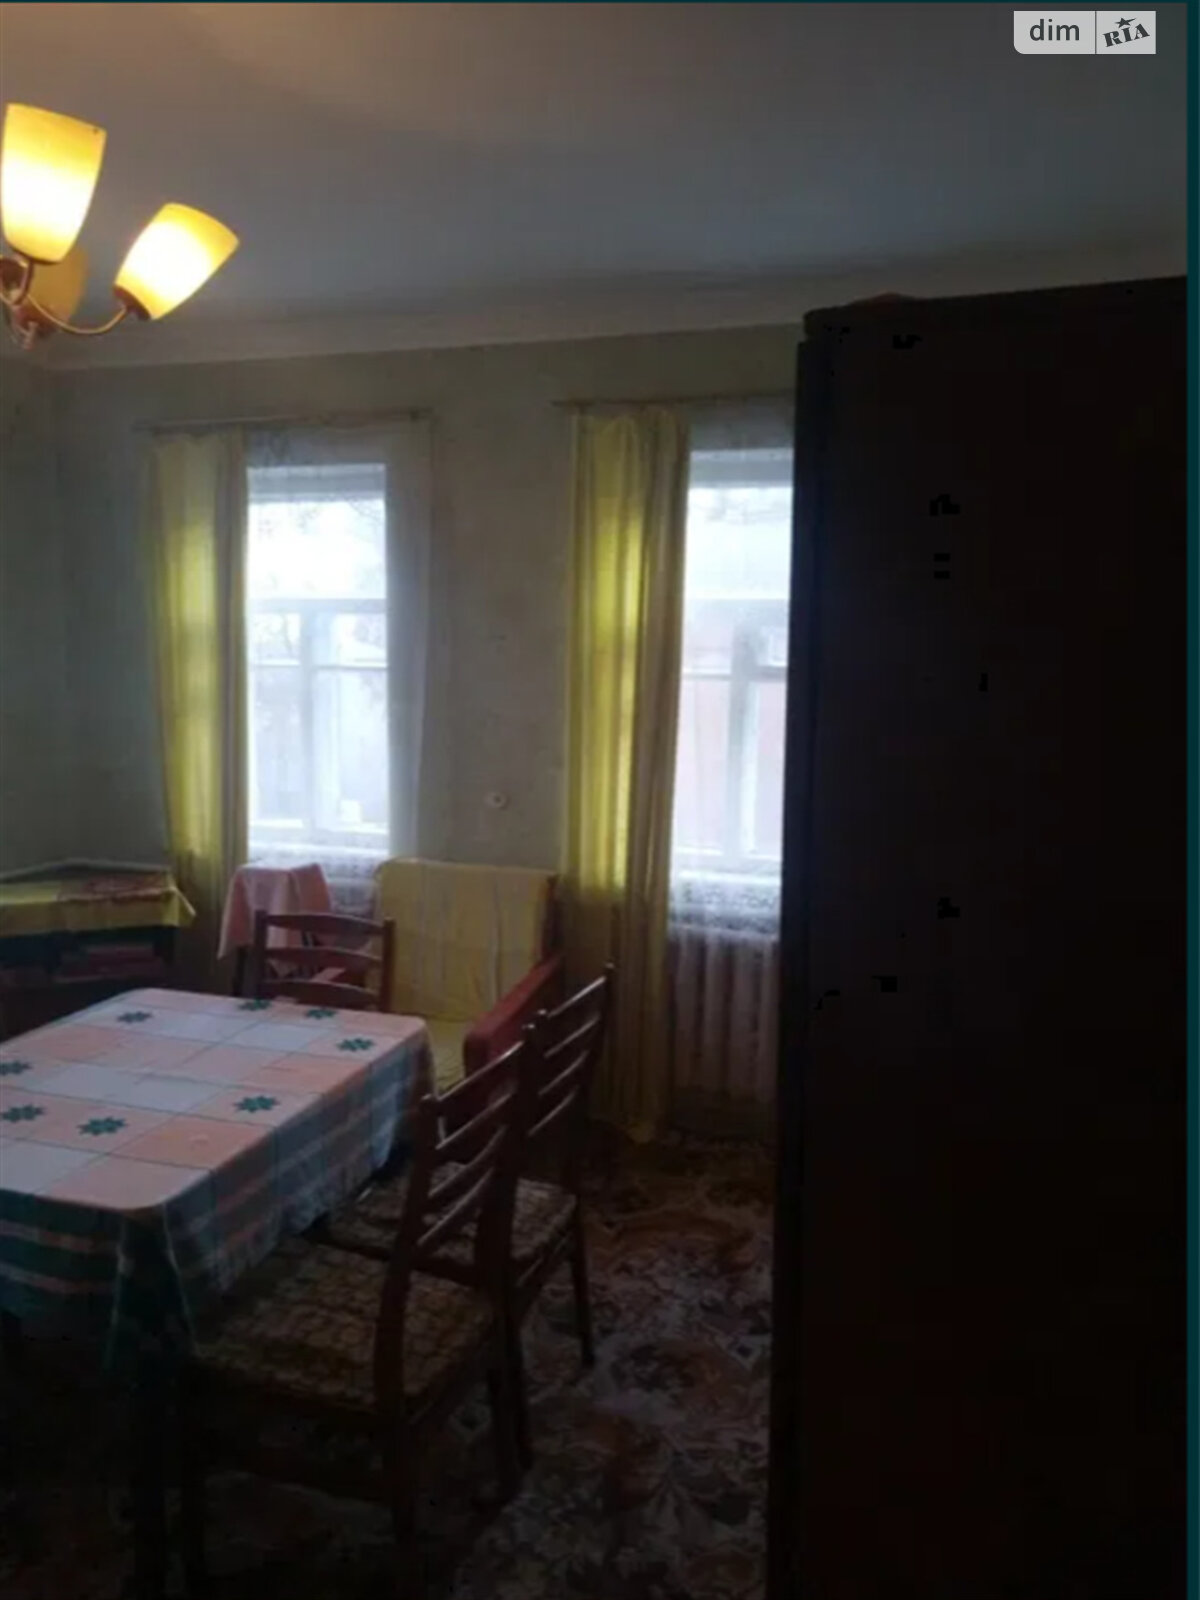 Продажа части дома в Харькове, улица Глазкова, 3 комнаты фото 1